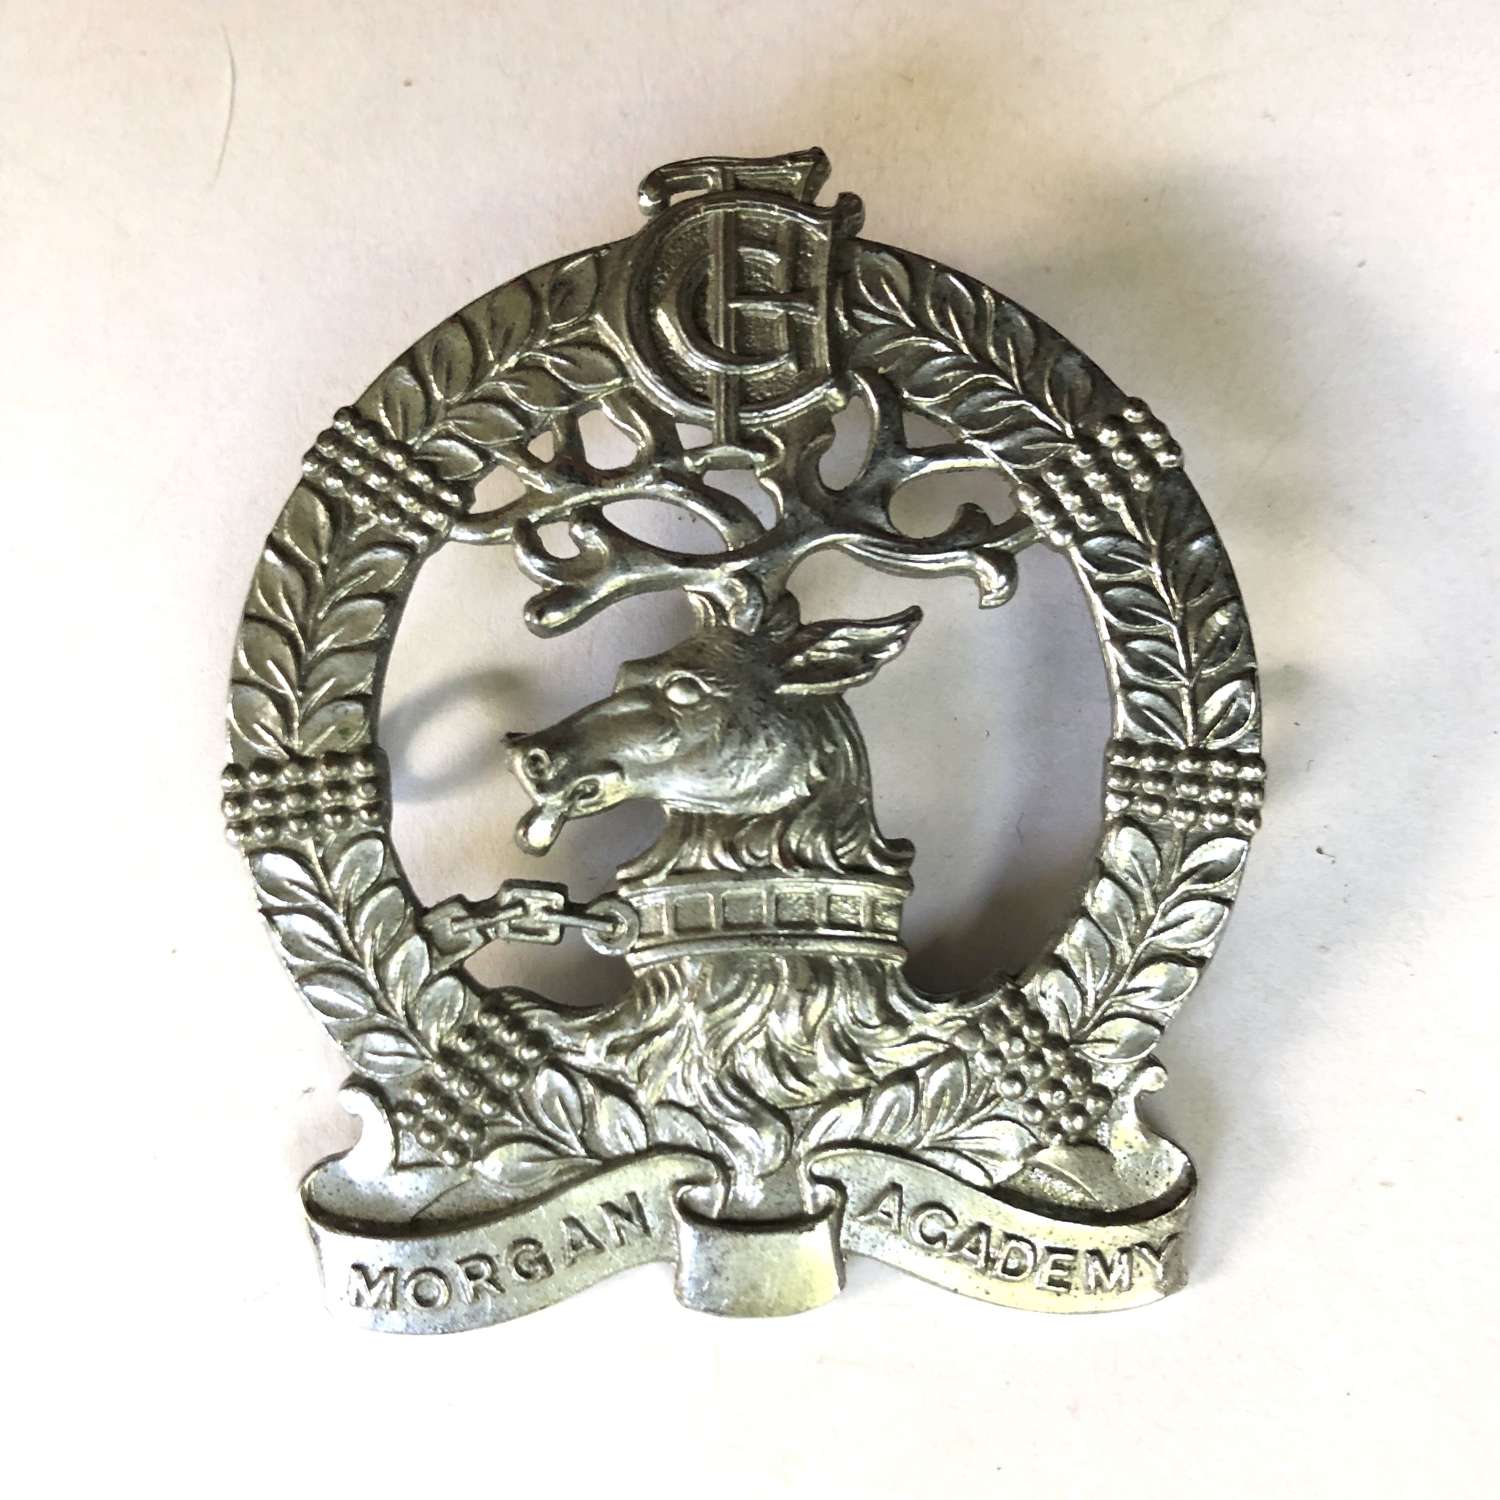 Morrison's Academy CCF Edinburgh Scottish glengarry badge